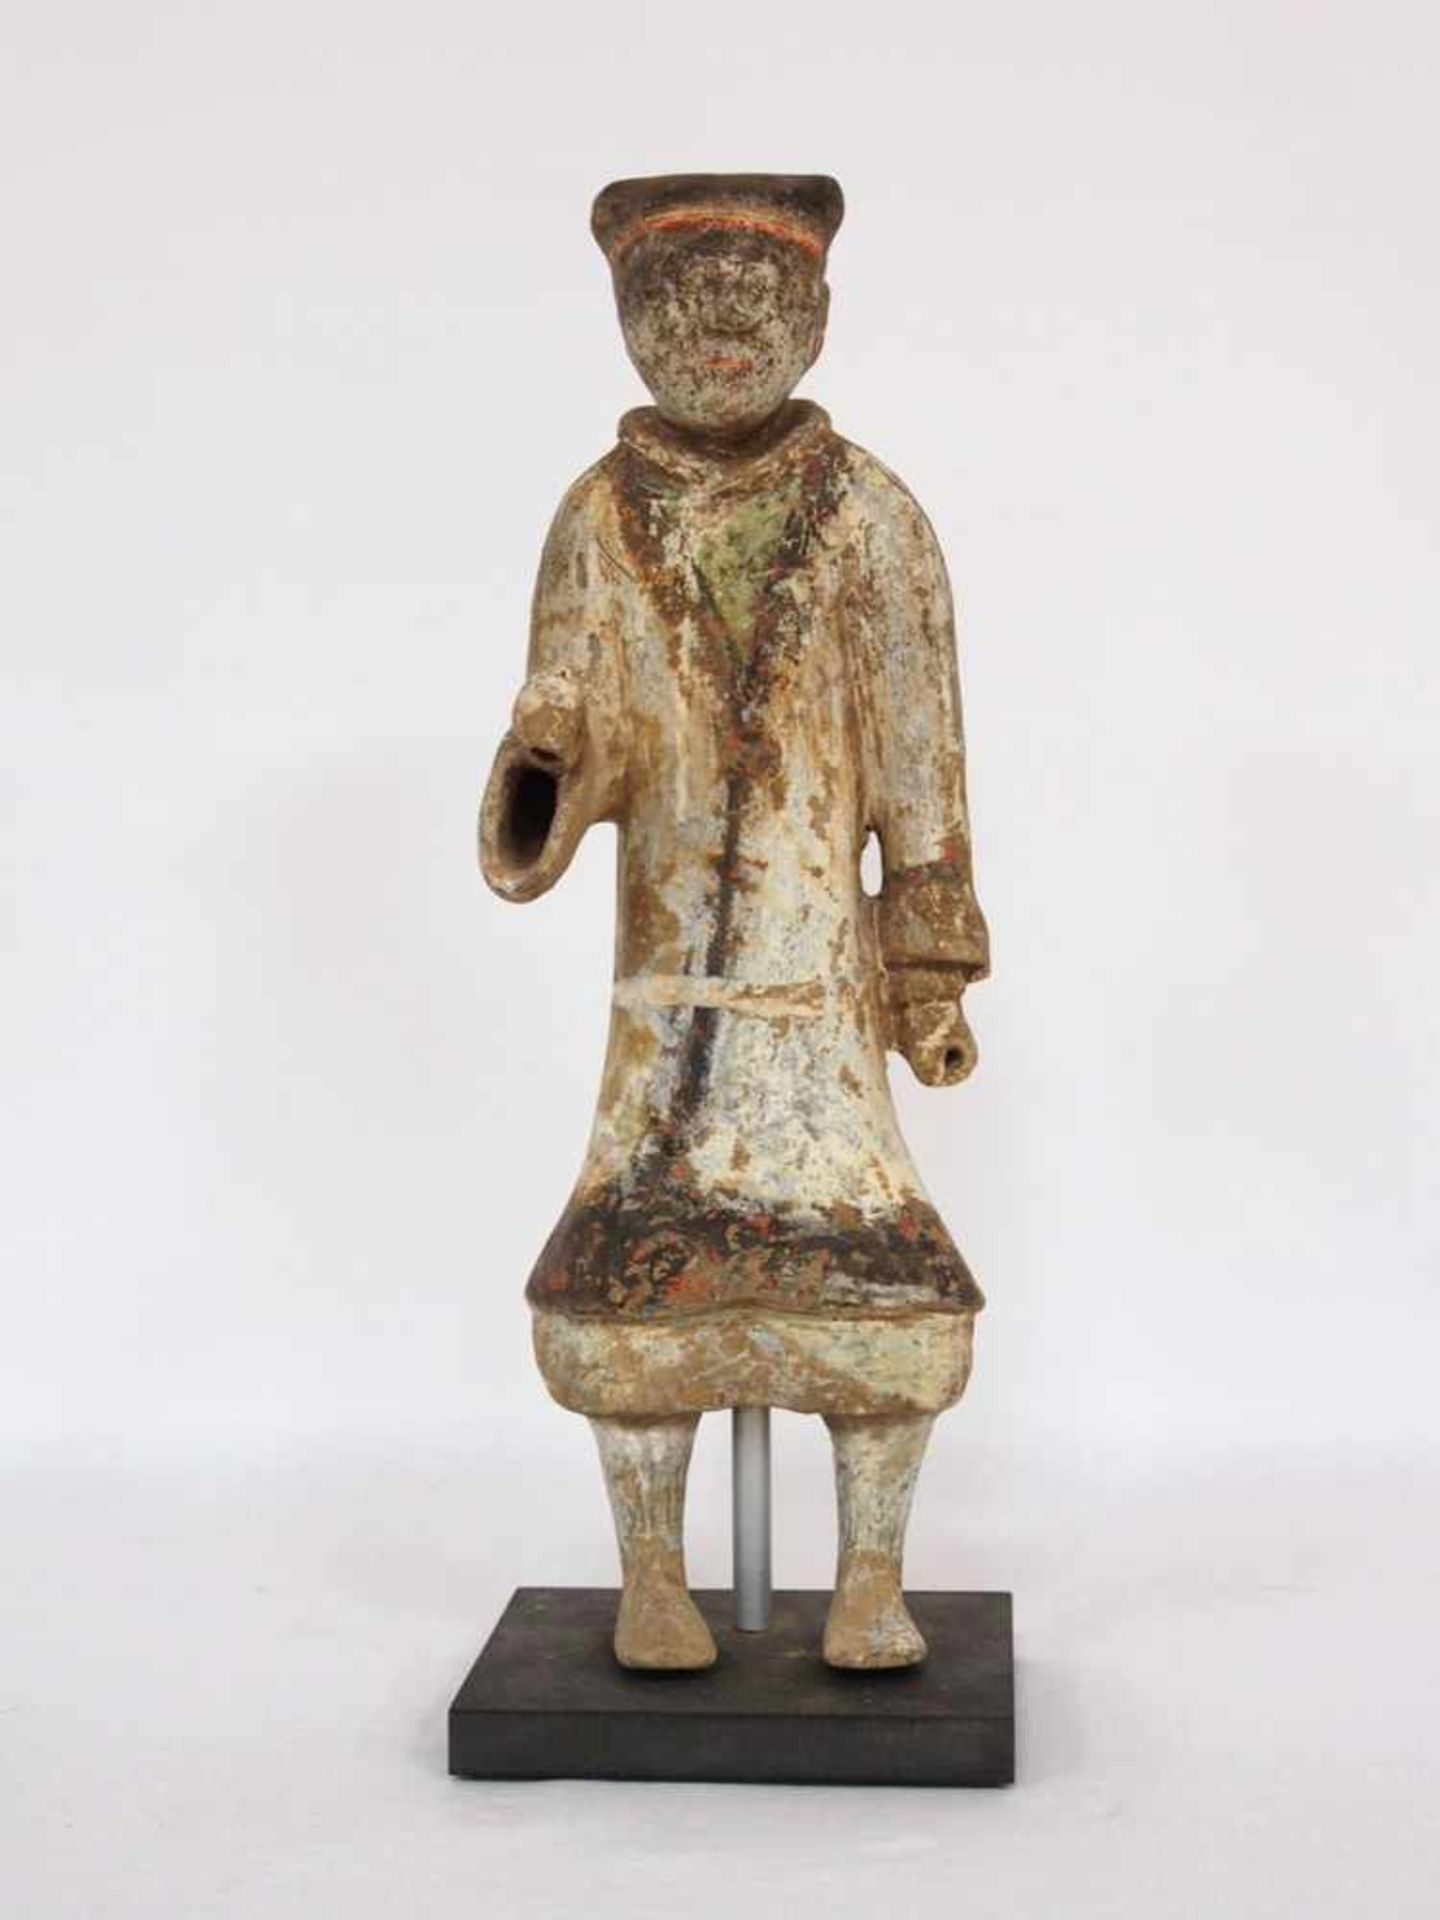 WächterfigurTon, bemalt, China, wohl Han-Periode, 206 v. Chr.-220 n. Chr., Höhe 44 cm (ohne Sockel)